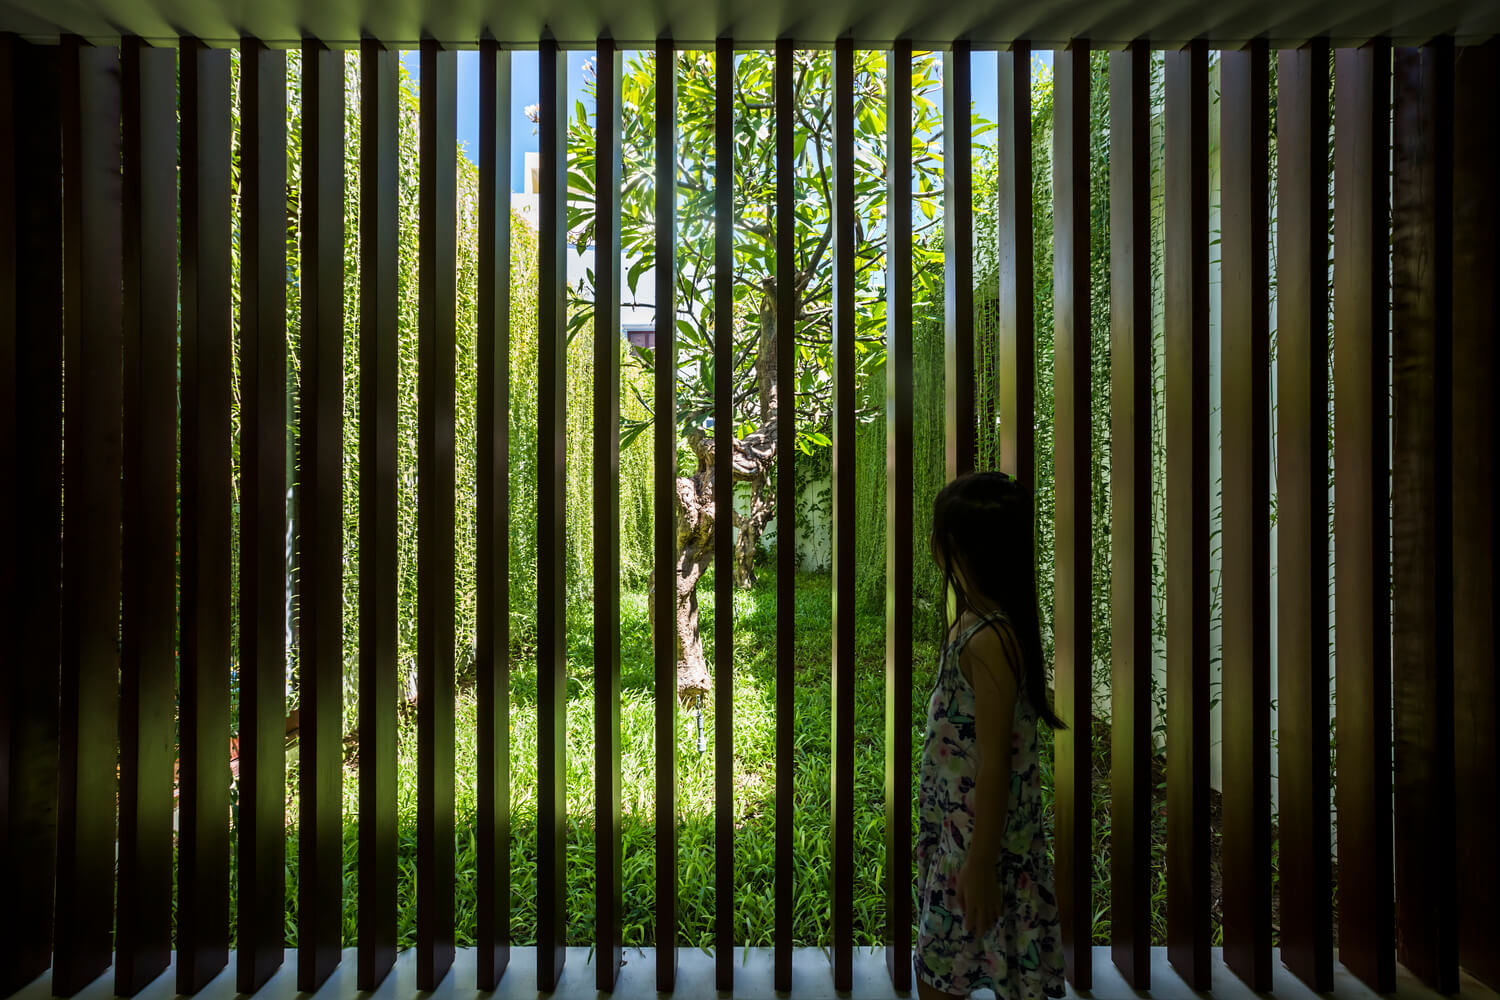 Casa Moderna + Jardim no Vietnã por MIA Design Studio 018 Corredor com Jardim Cortina Verde